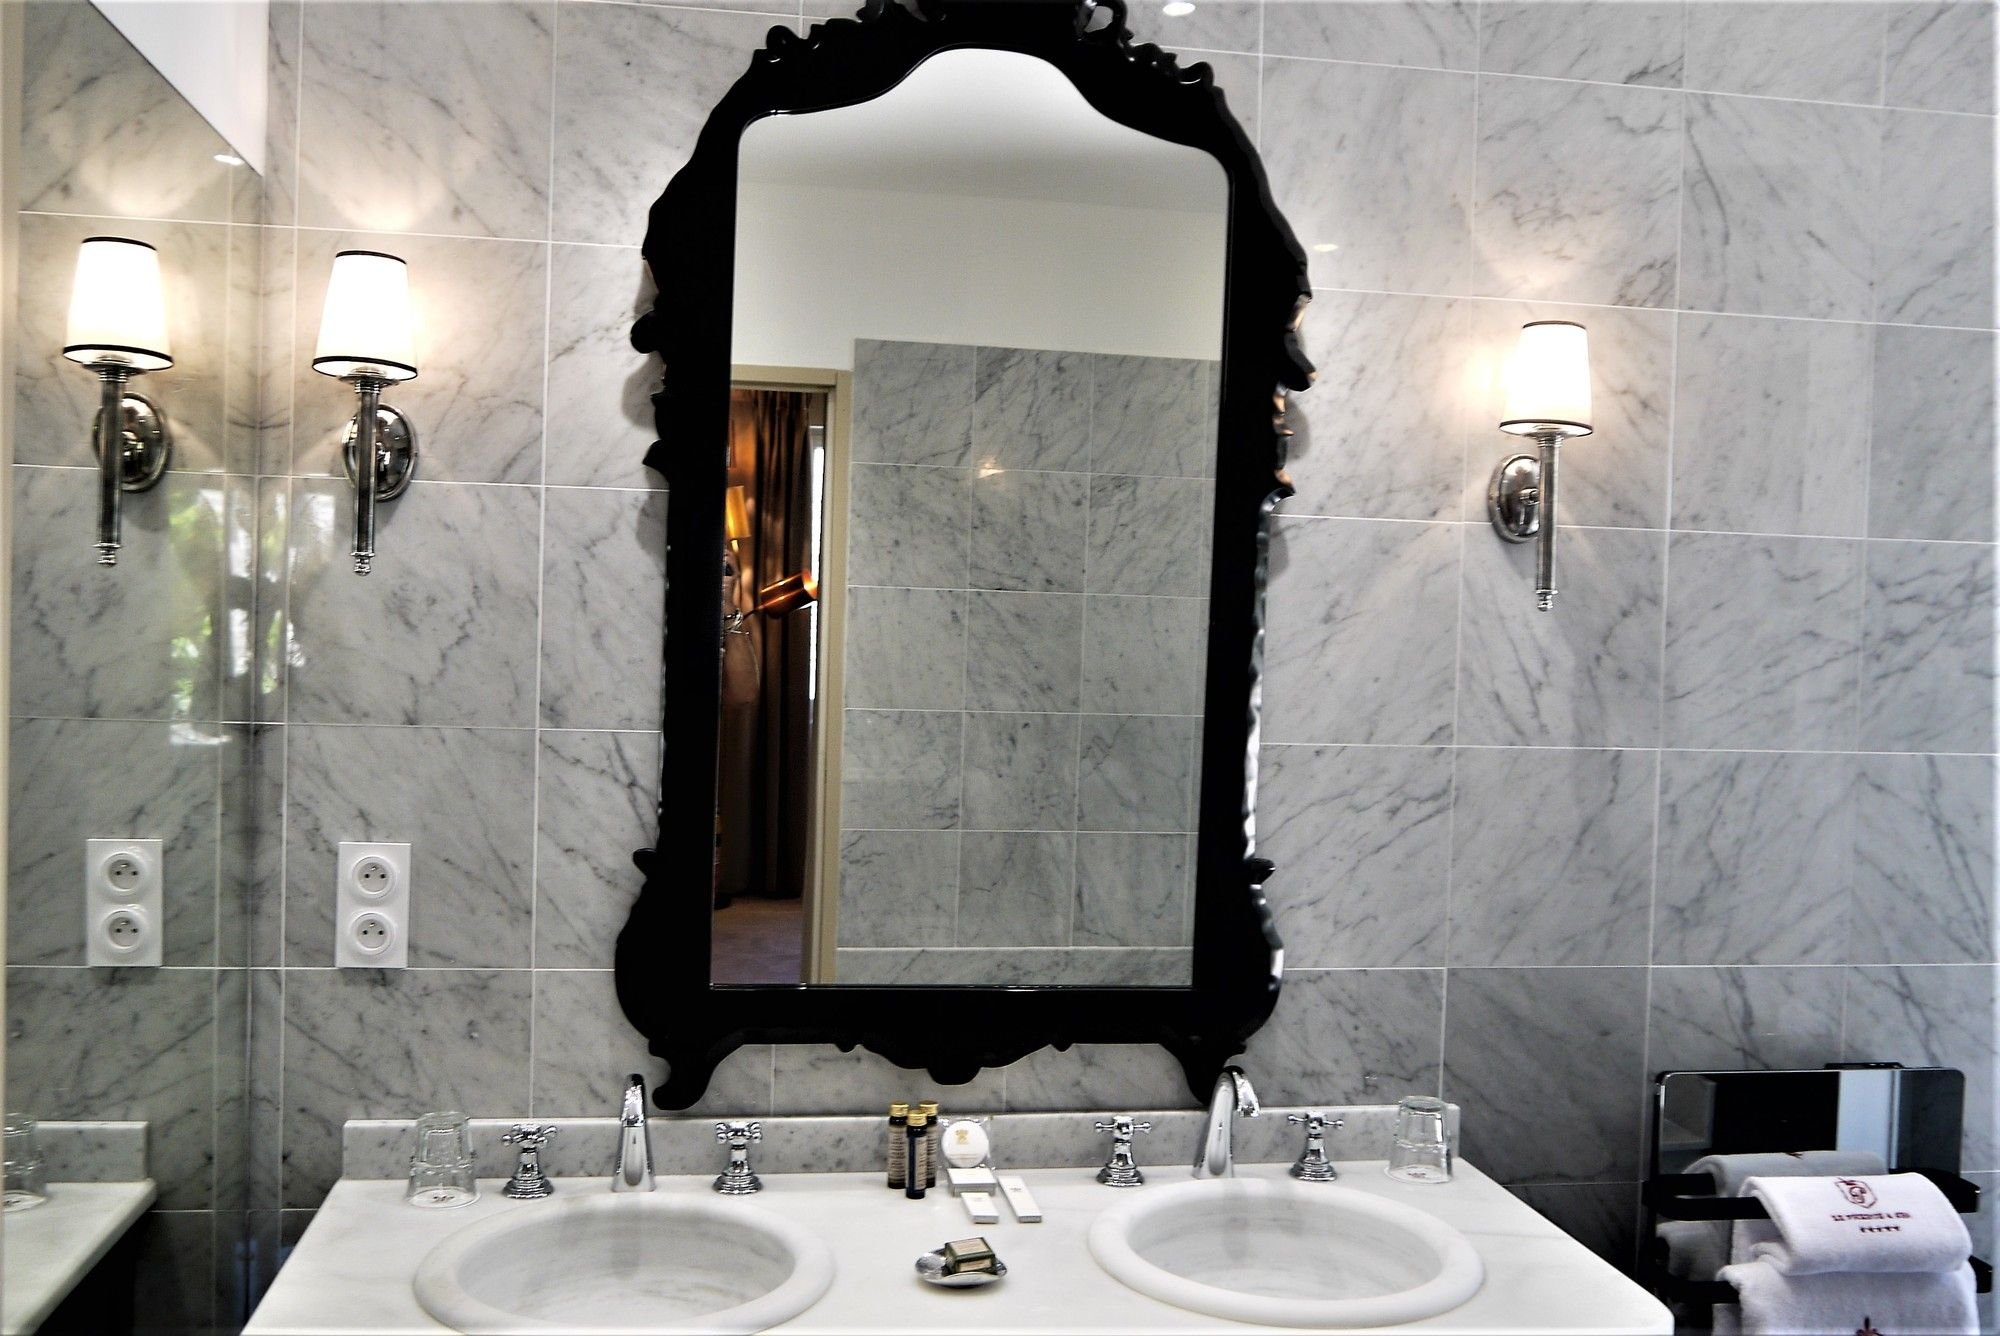 Le Phébus & Spa Suite Grand Prestige bathroom